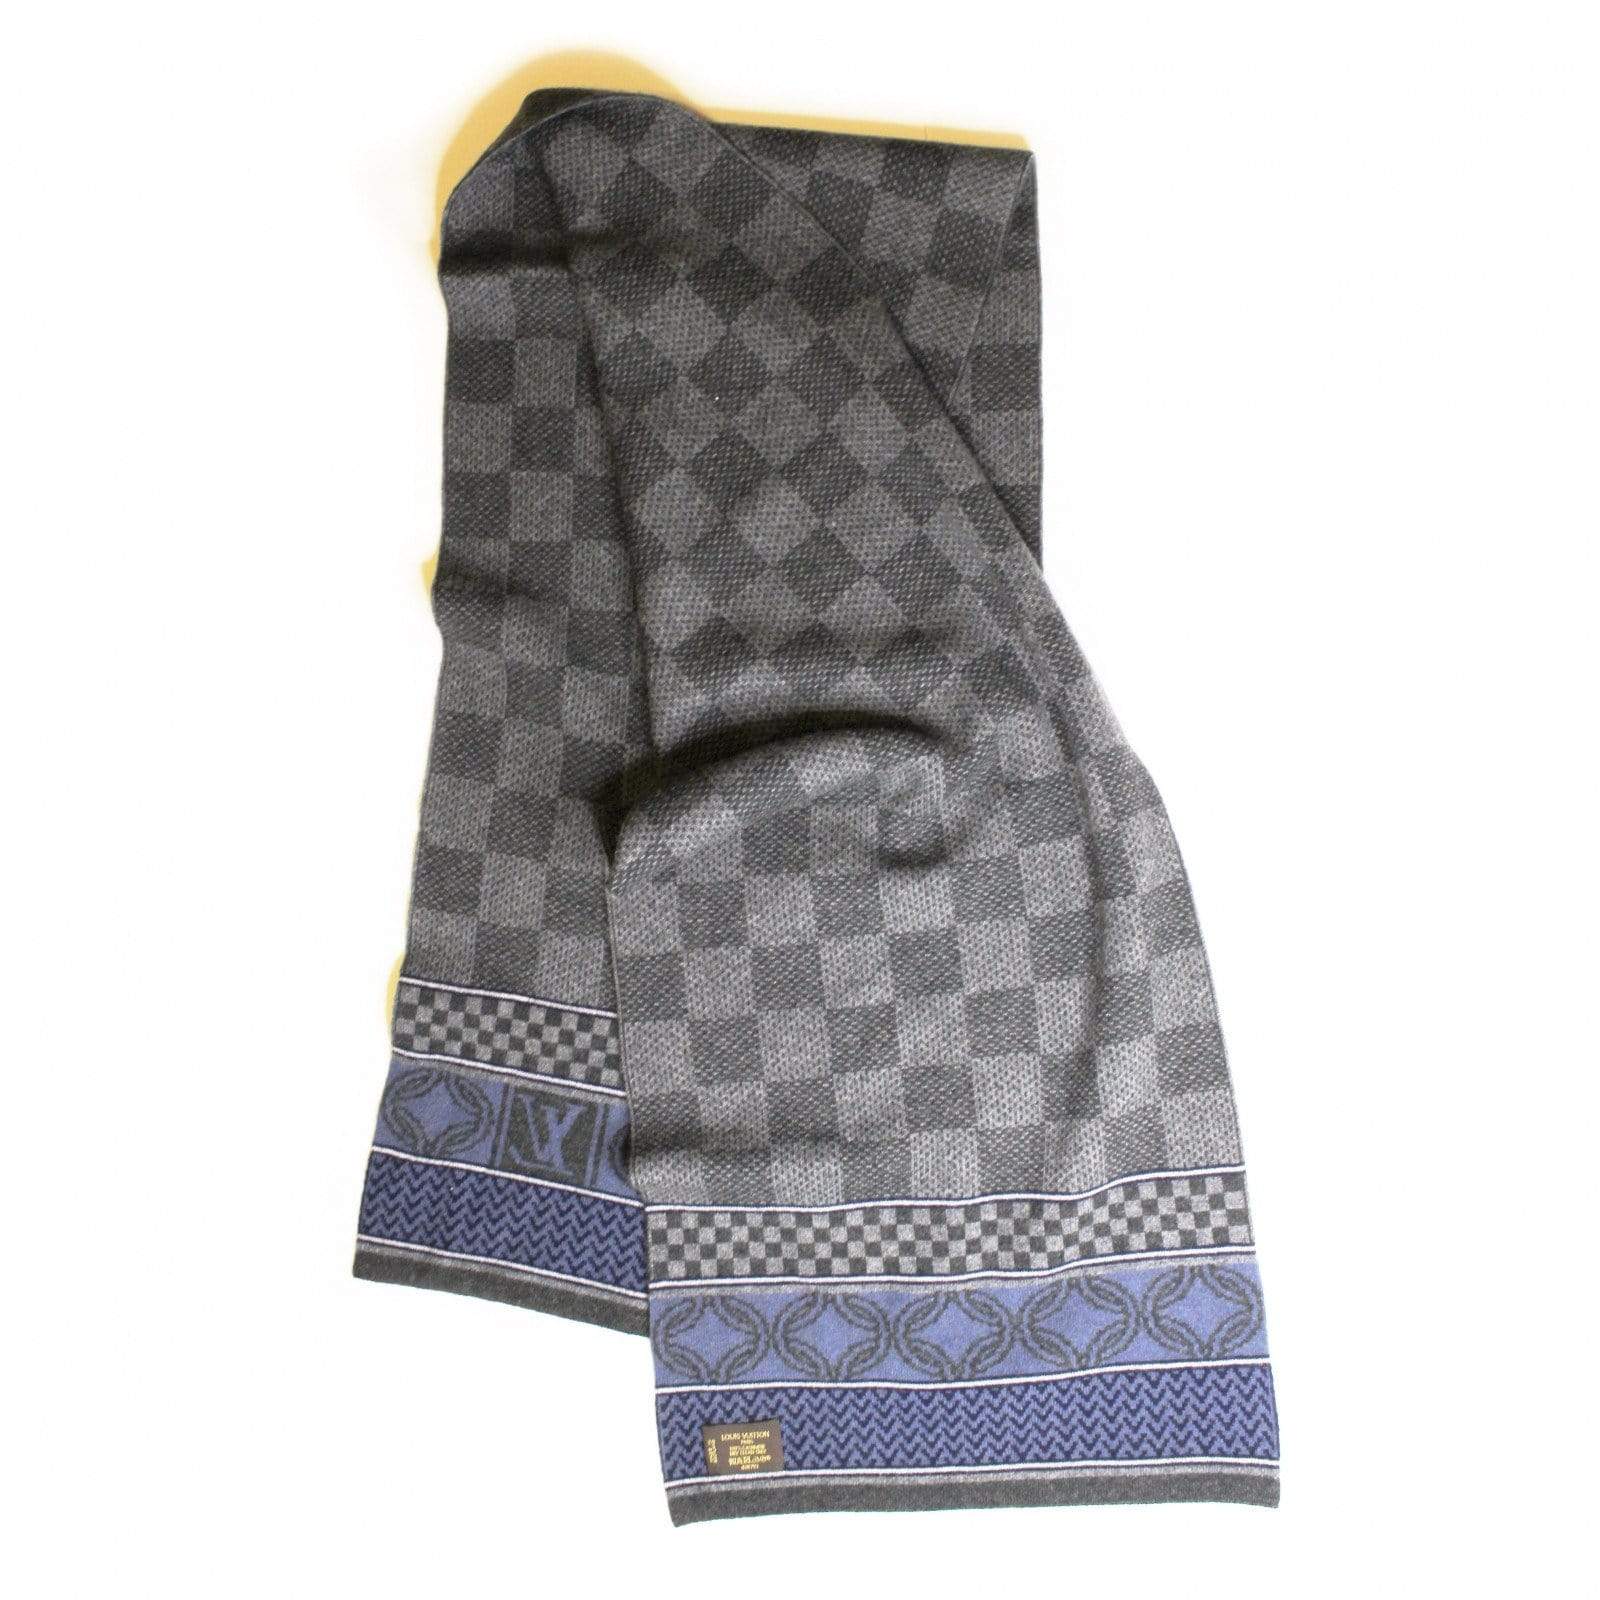 Dhgate Louis Vuitton Scarf  Louis vuitton scarf, Designer scarves